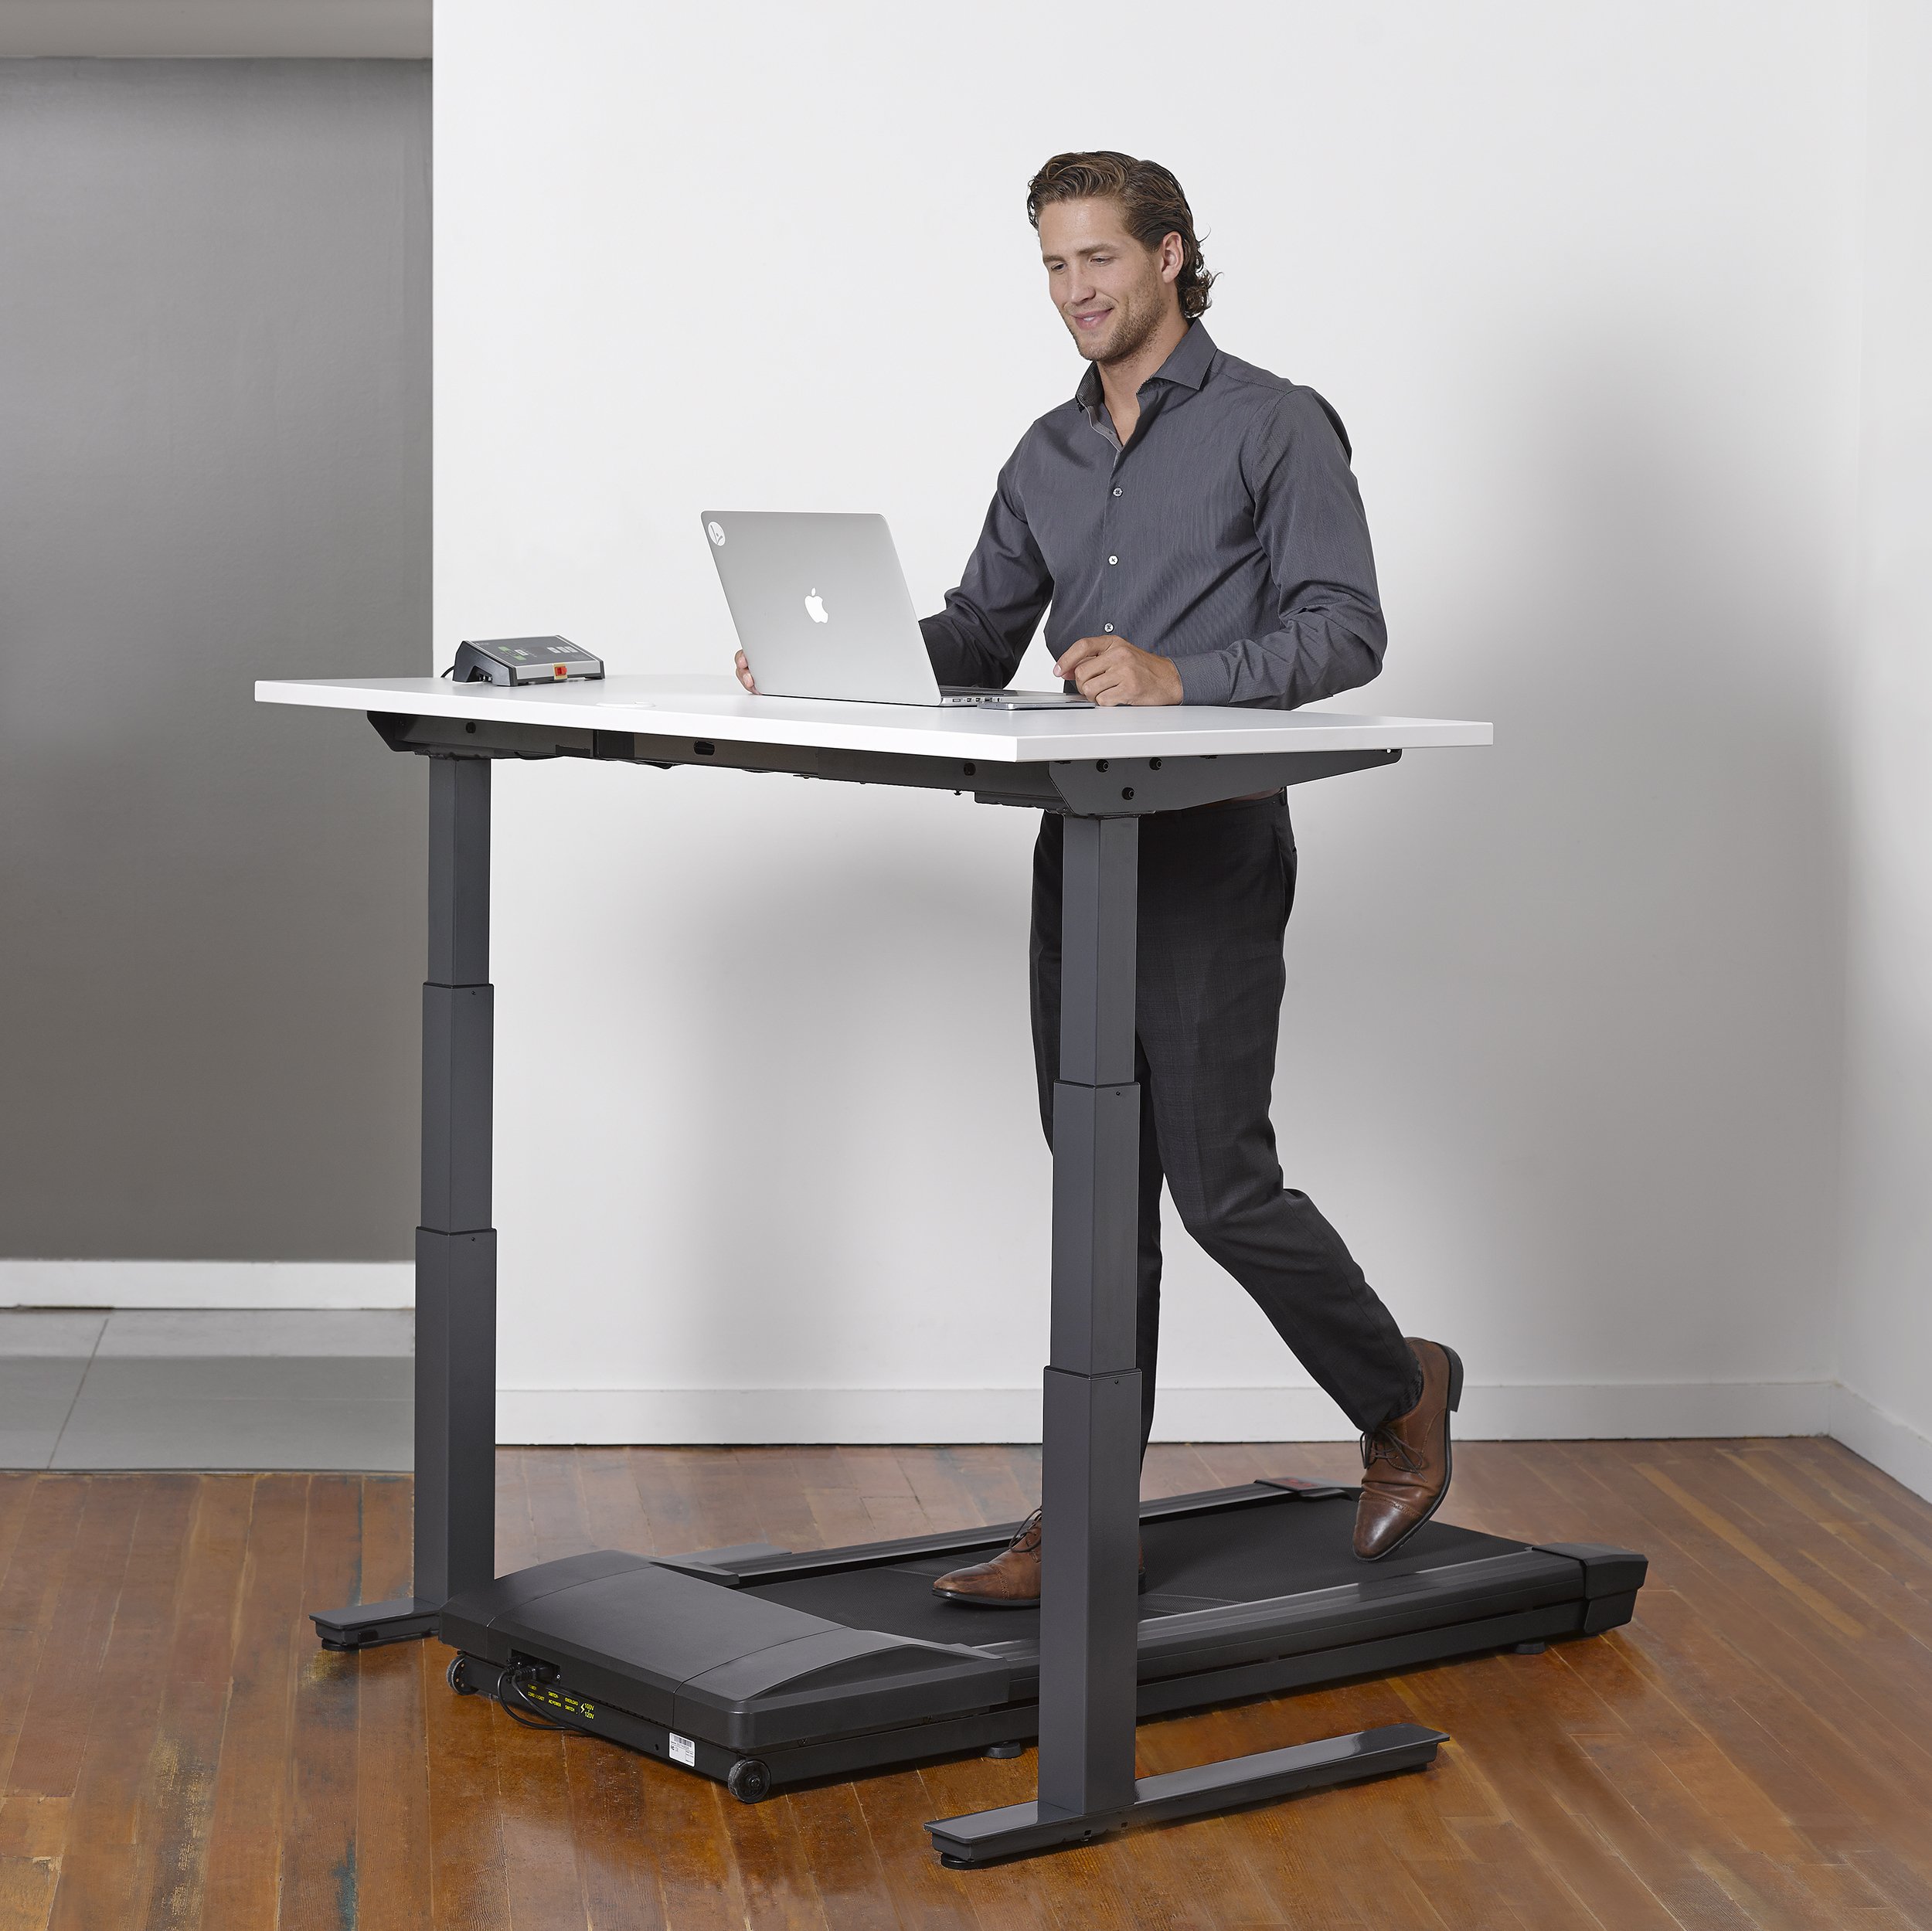 Stand height. Tr800-dt3 under Desk Treadmill. Стоячий стол. Офисный стол стоячий. Компьютерный стол стоячий.